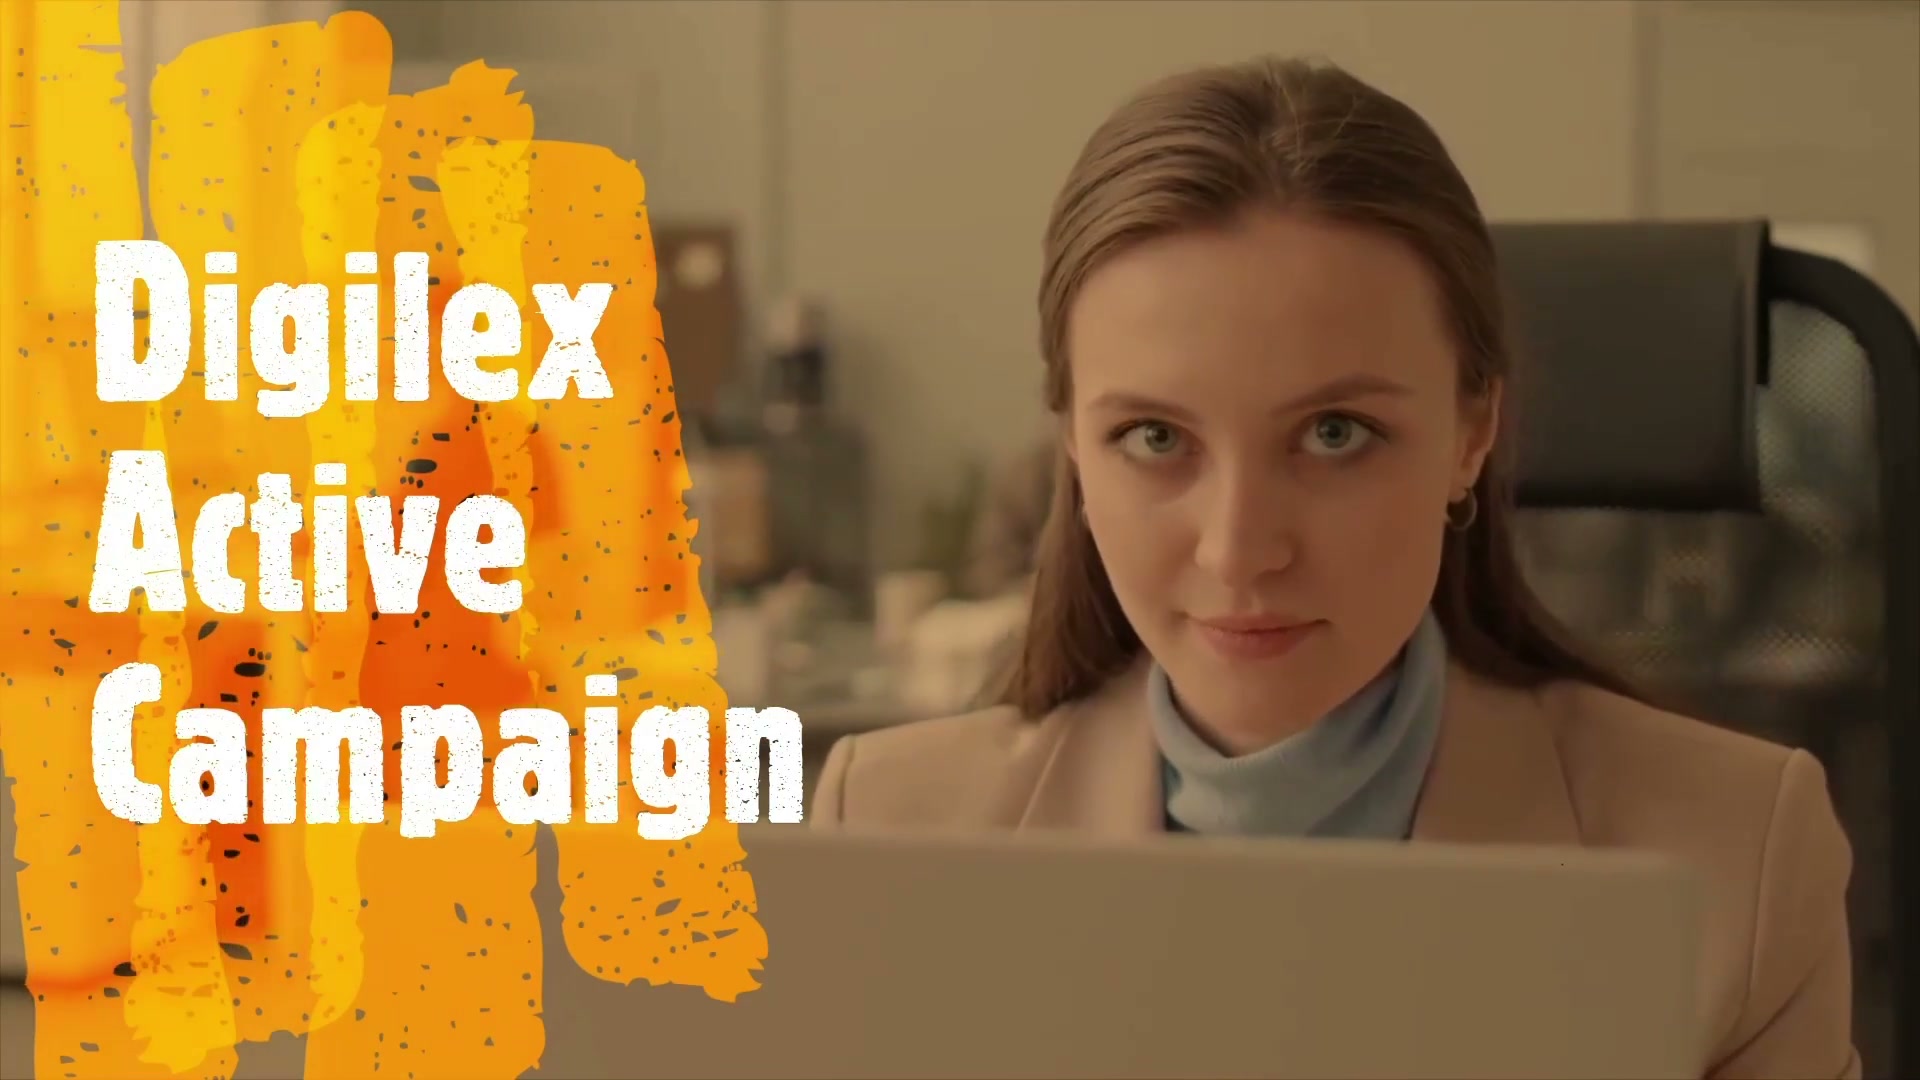 Digilex Active Campaign